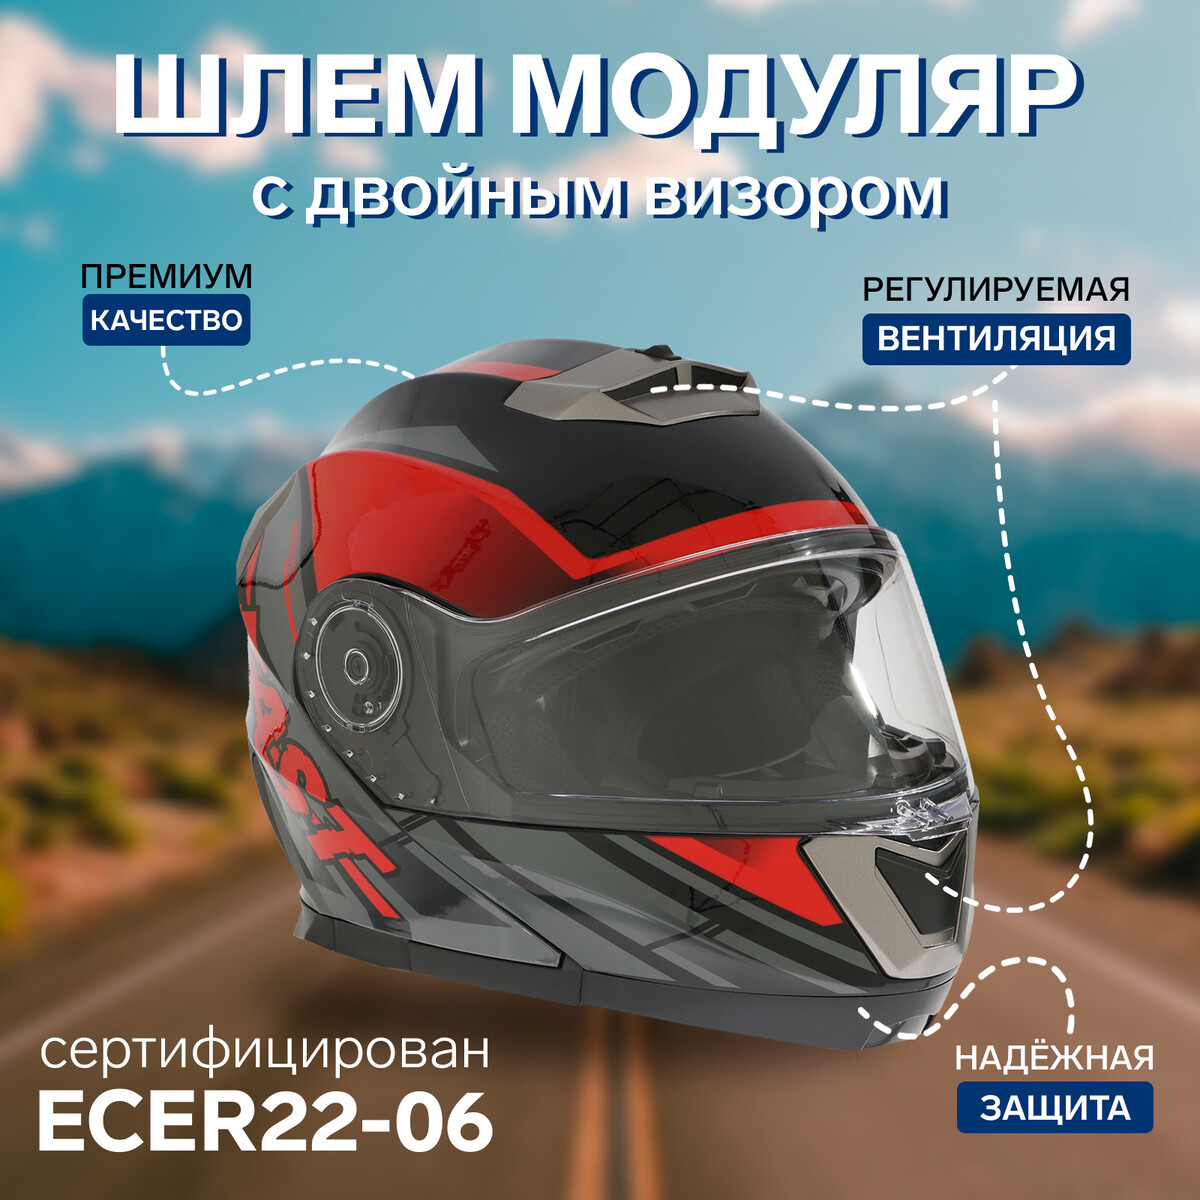 Шлем модуляр с двумя визорами, размер m (57-58), модель - bld-160e, черно-красный